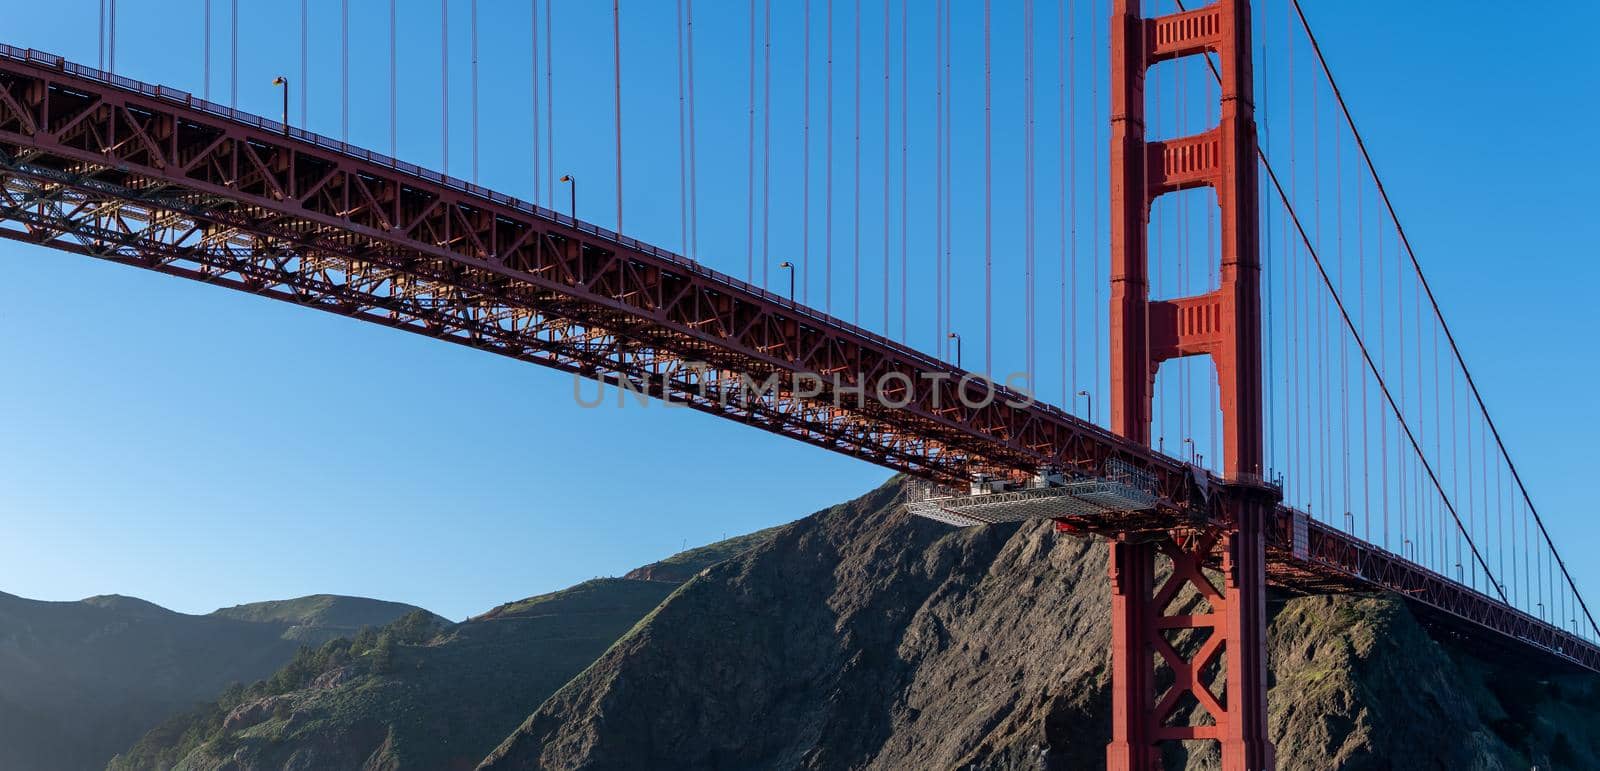 Famous Golden Gate Bridge in San Francisco California USA. The Golden Gate Bridge is a suspension bridge spanning the Golden Gate connecting San Francisco bay and pacific ocean by billroque